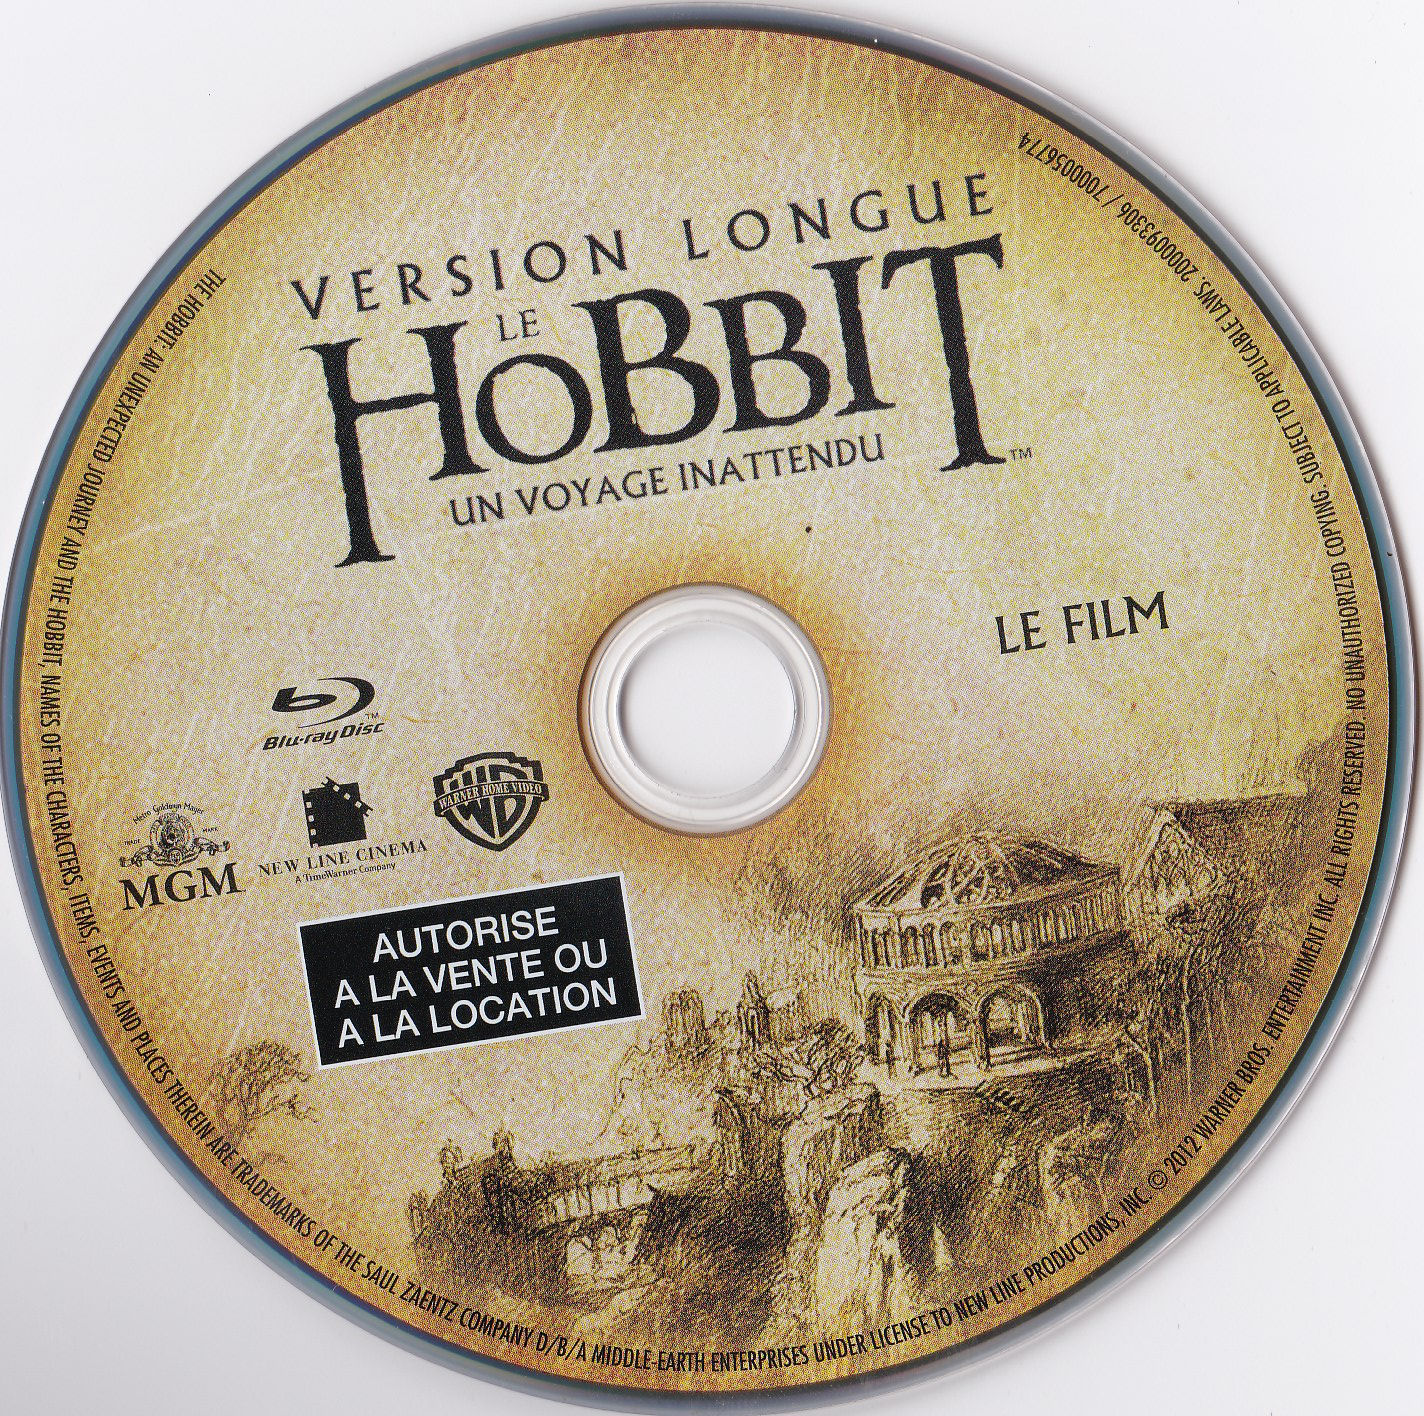 Le Hobbit un voyage inattendu (Version longue) (BLU-RAY)